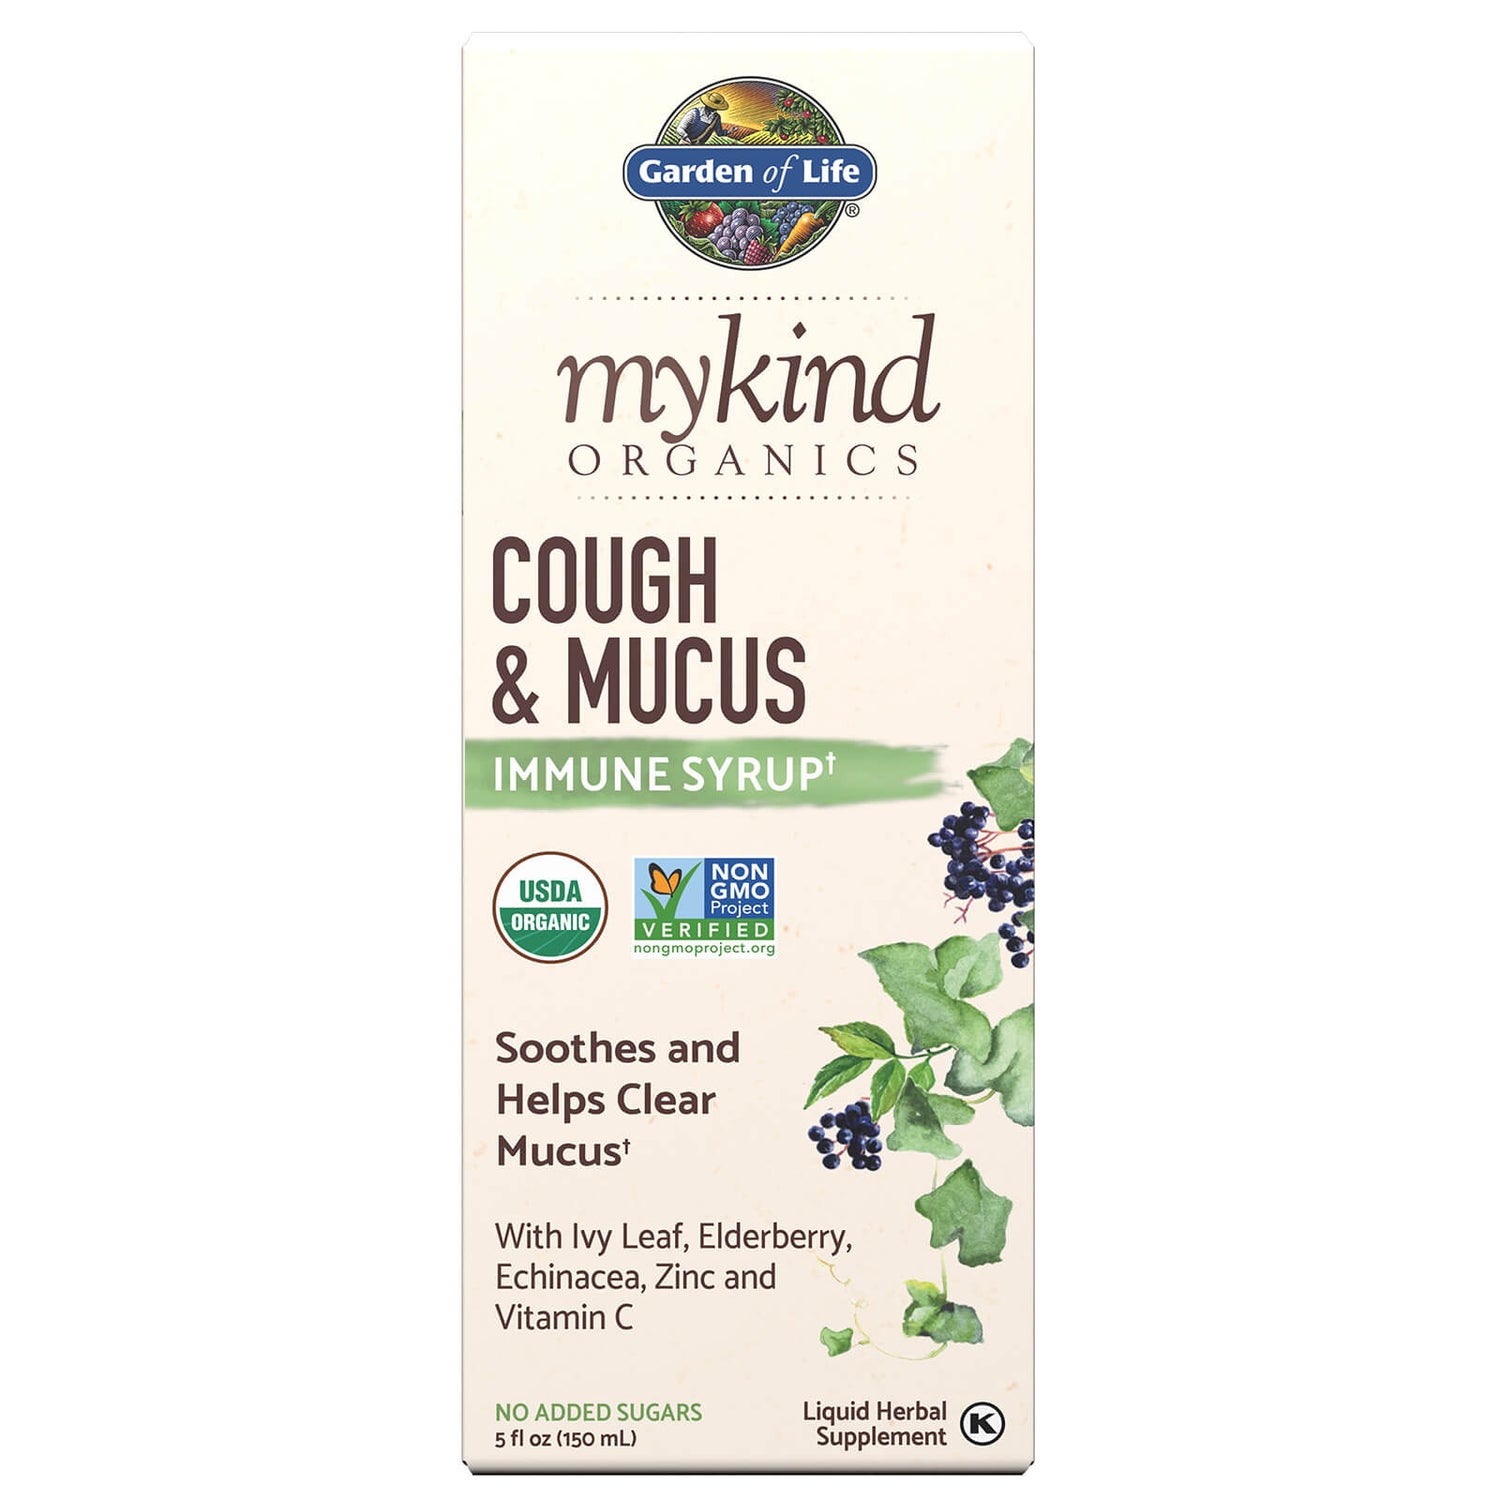 Mykind Organics Cough & Mucus Immune Syrup 150ml Liquid